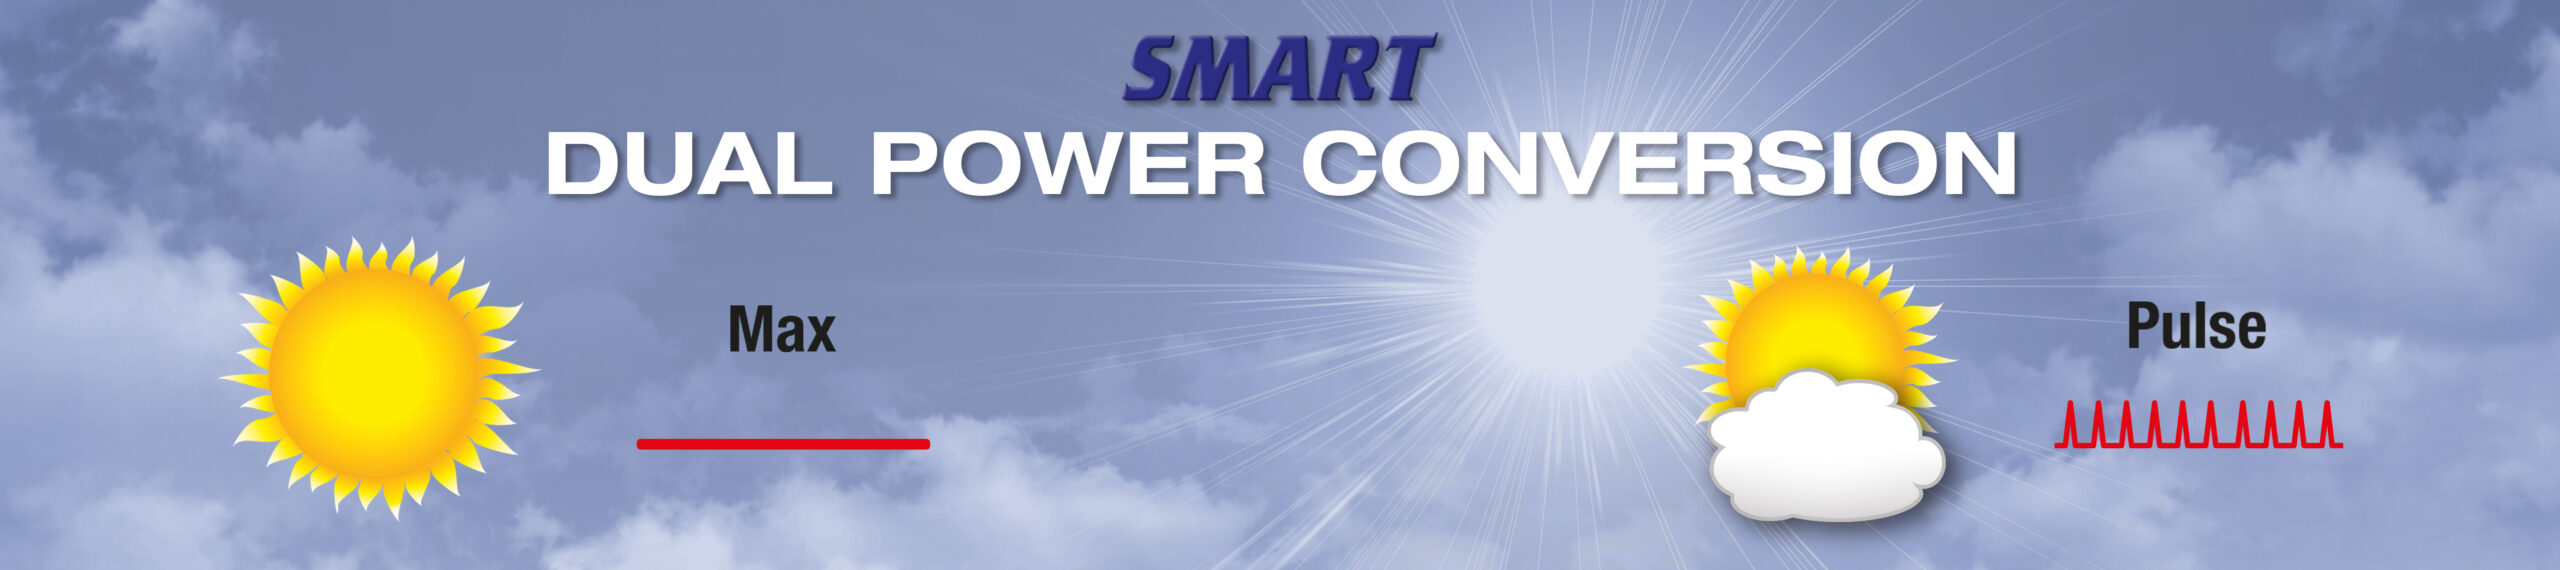 smart dual power conversion